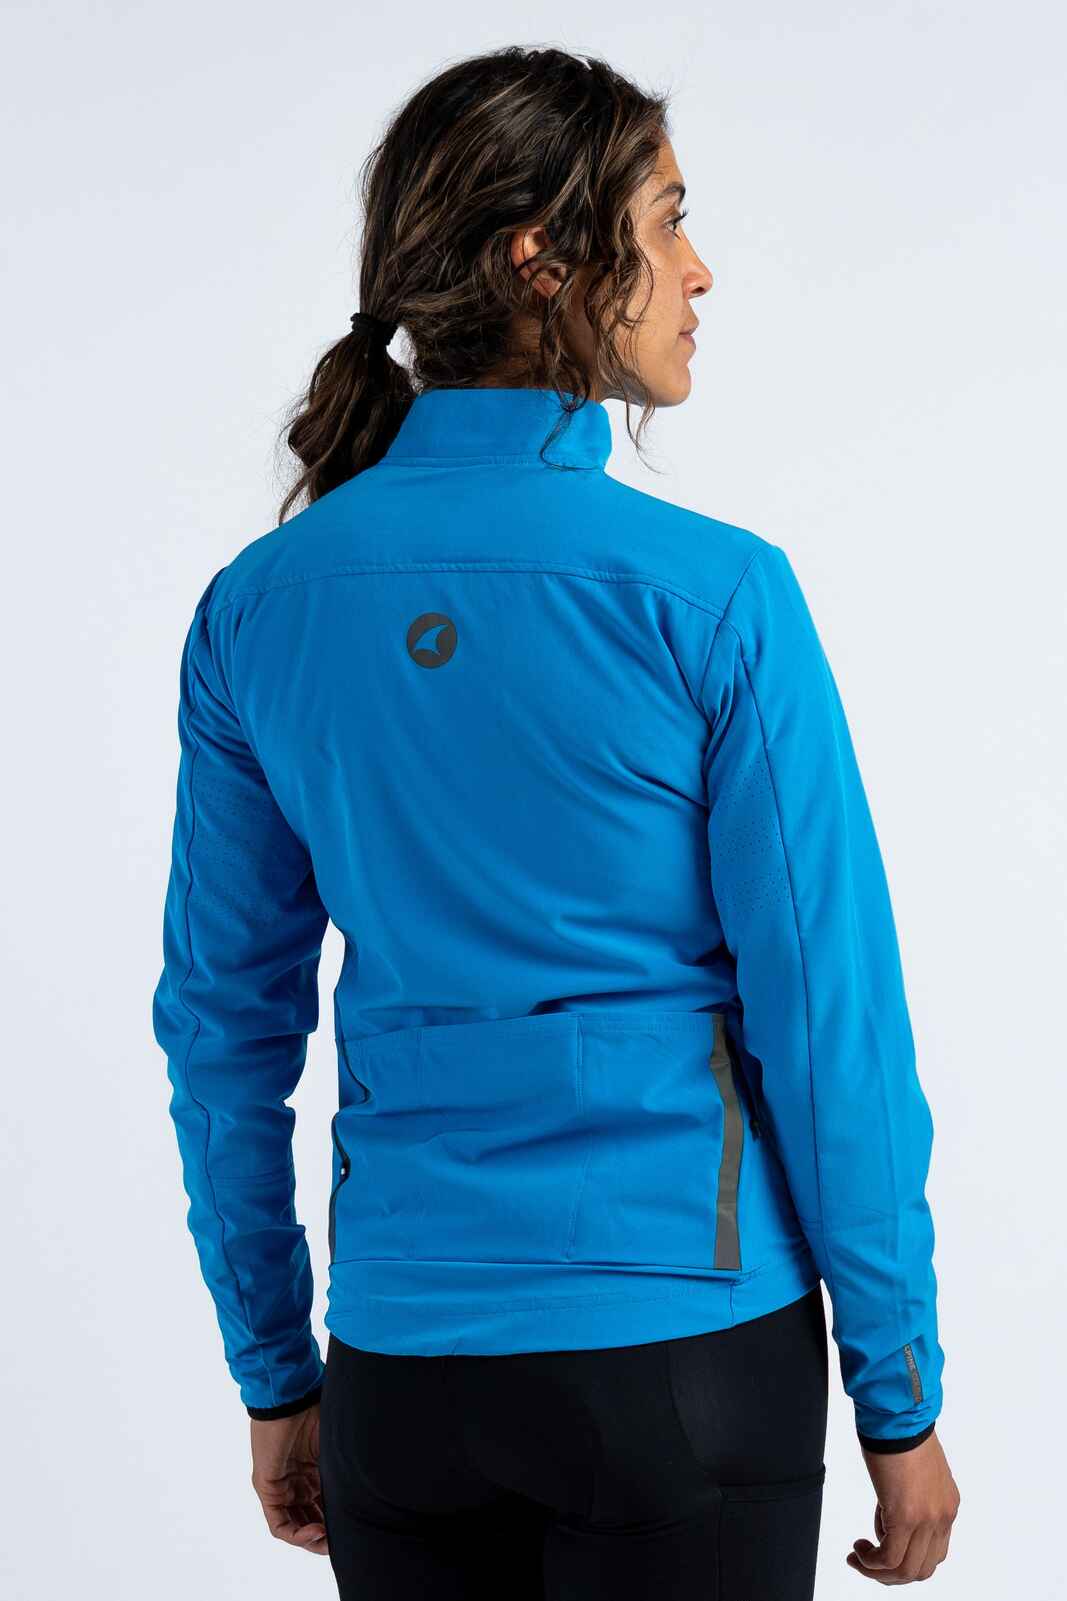 Women's Blue Winter Cycling Jacket - Alpine Back View